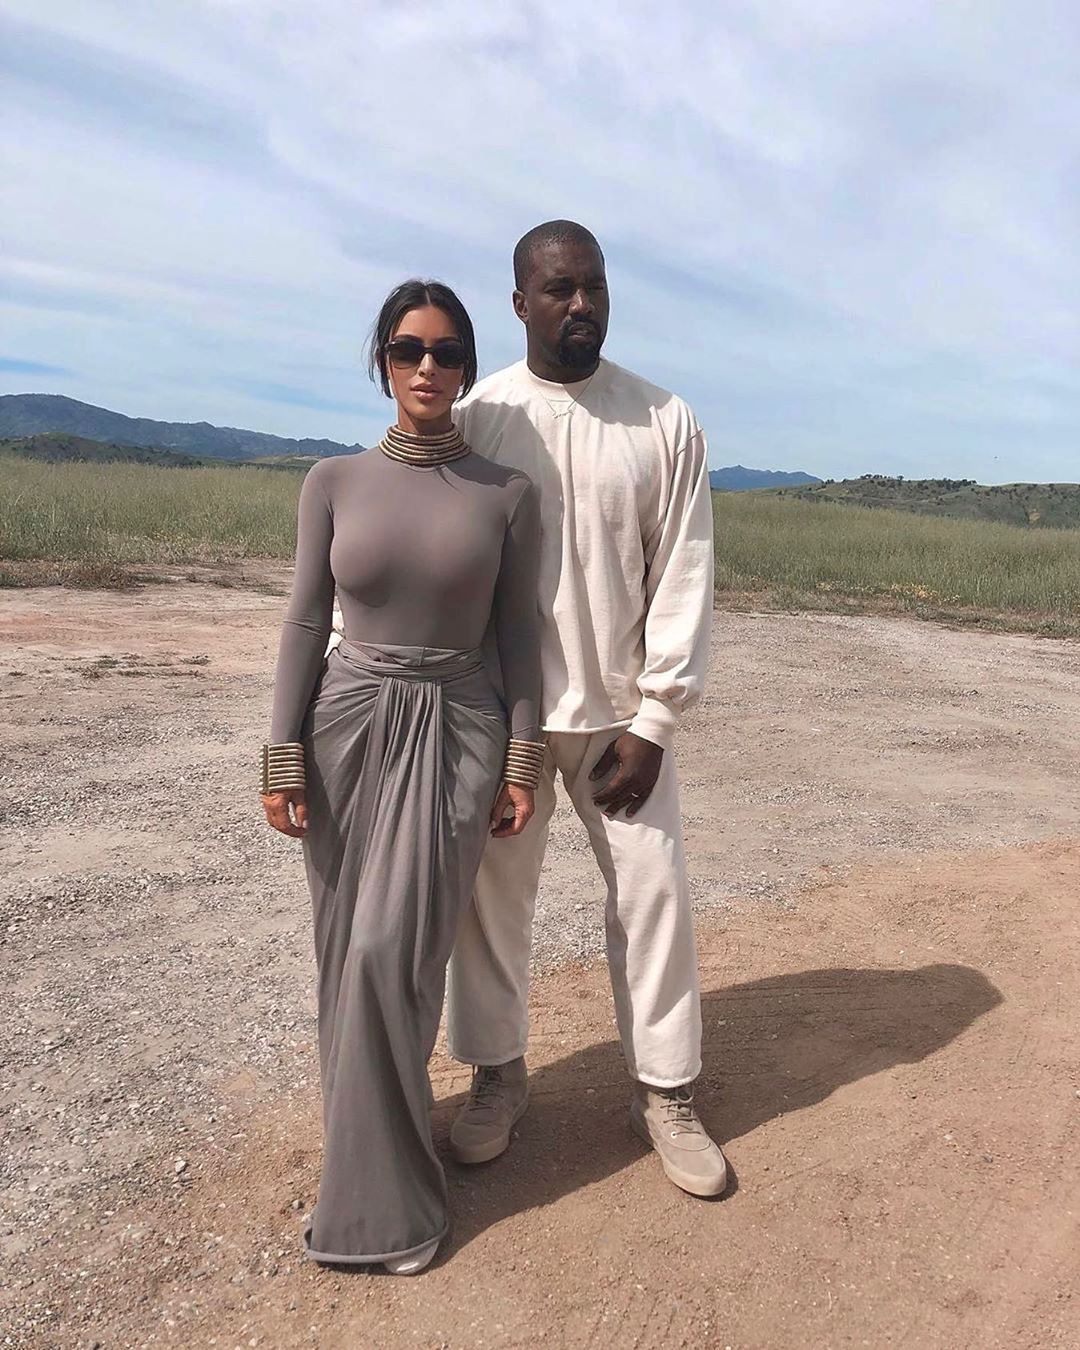 Kim Kardashian and Kanye West at the Louis Vuitton PFW show